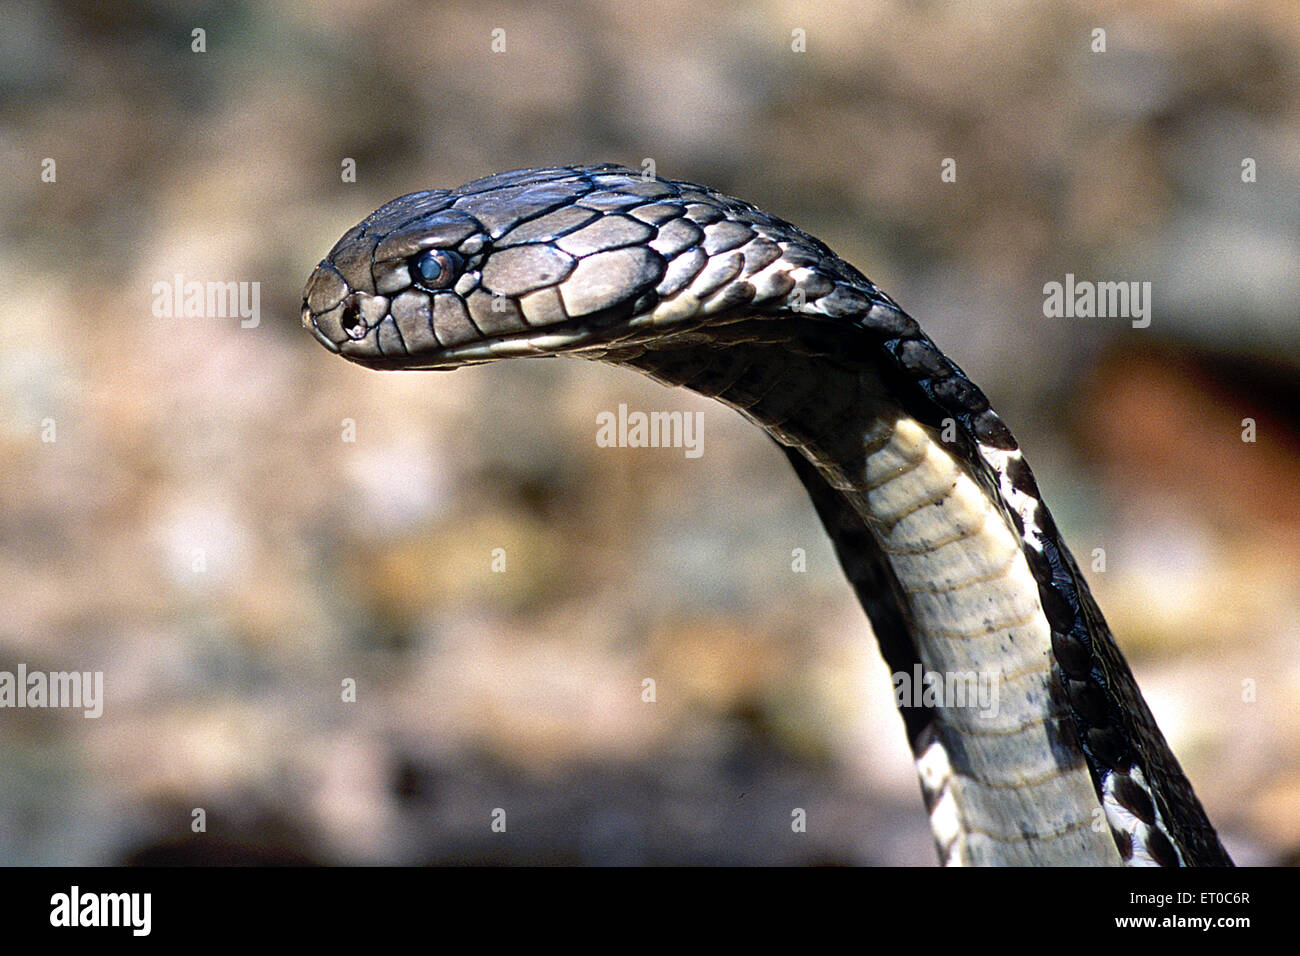 König Cobra, ophiophagus hannah, längste giftige Schlange, Karnataka; Indien, asien Stockfoto